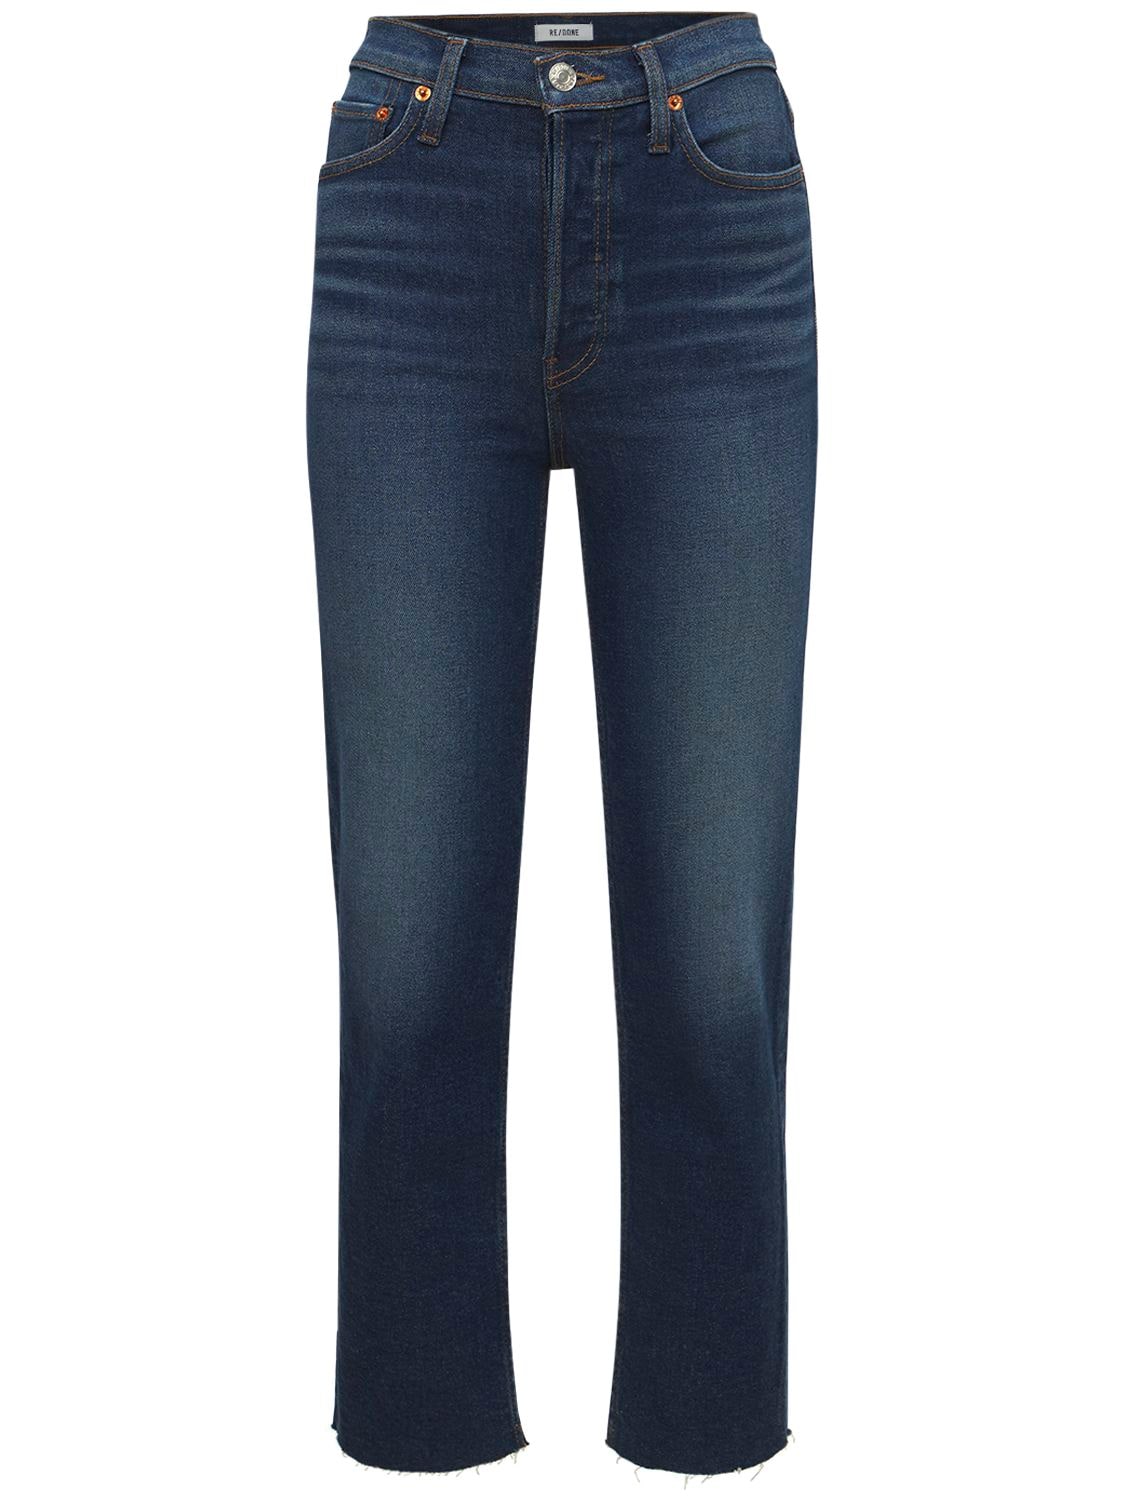 70s Stove Pipe Cotton Blend Denim Jeans